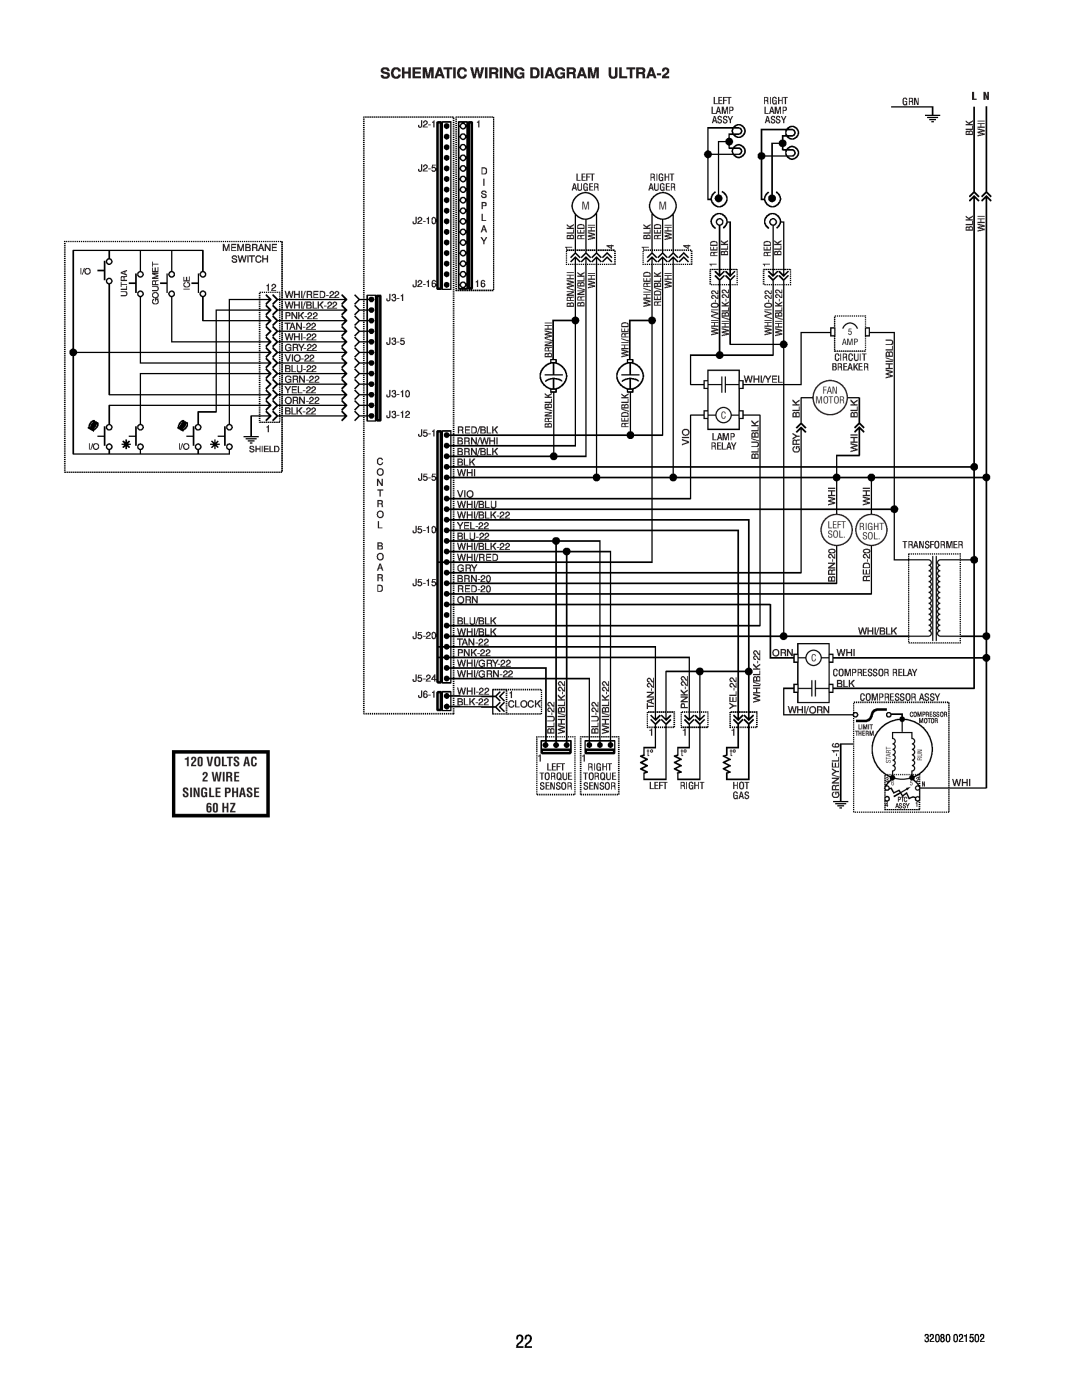 Bunn manual SCHEMATIC WIRING DIAGRAM ULTRA-2, 32082.0000B, 01/02 2002 BUNN-O-MATIC CORPORATION 